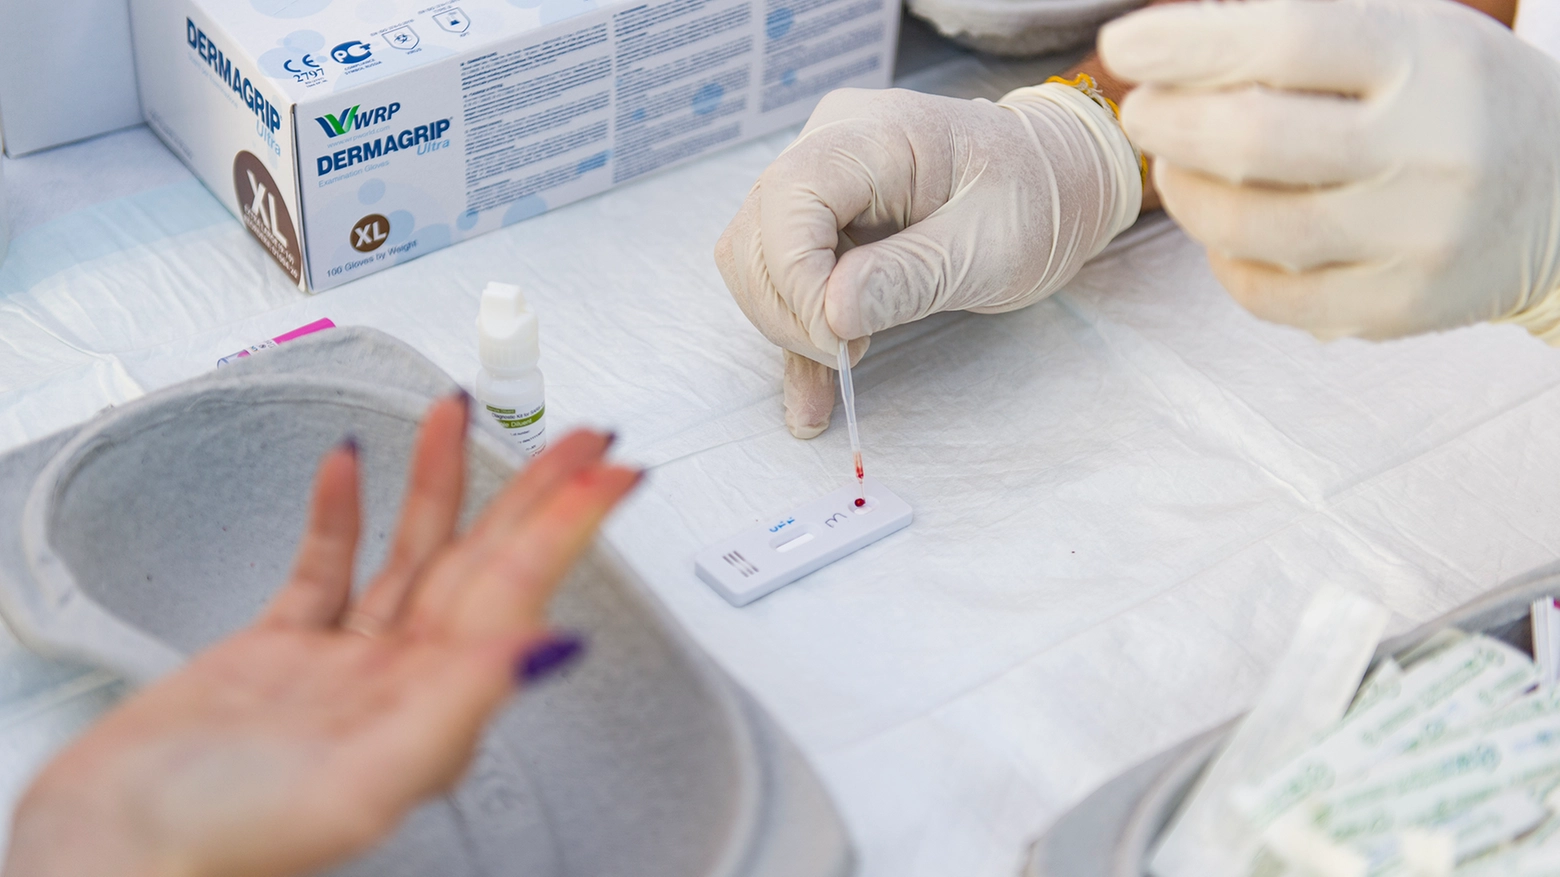 Test sierologici al personale scolastico, 2 casi positivi al Coronavirus in Emilia Romagna